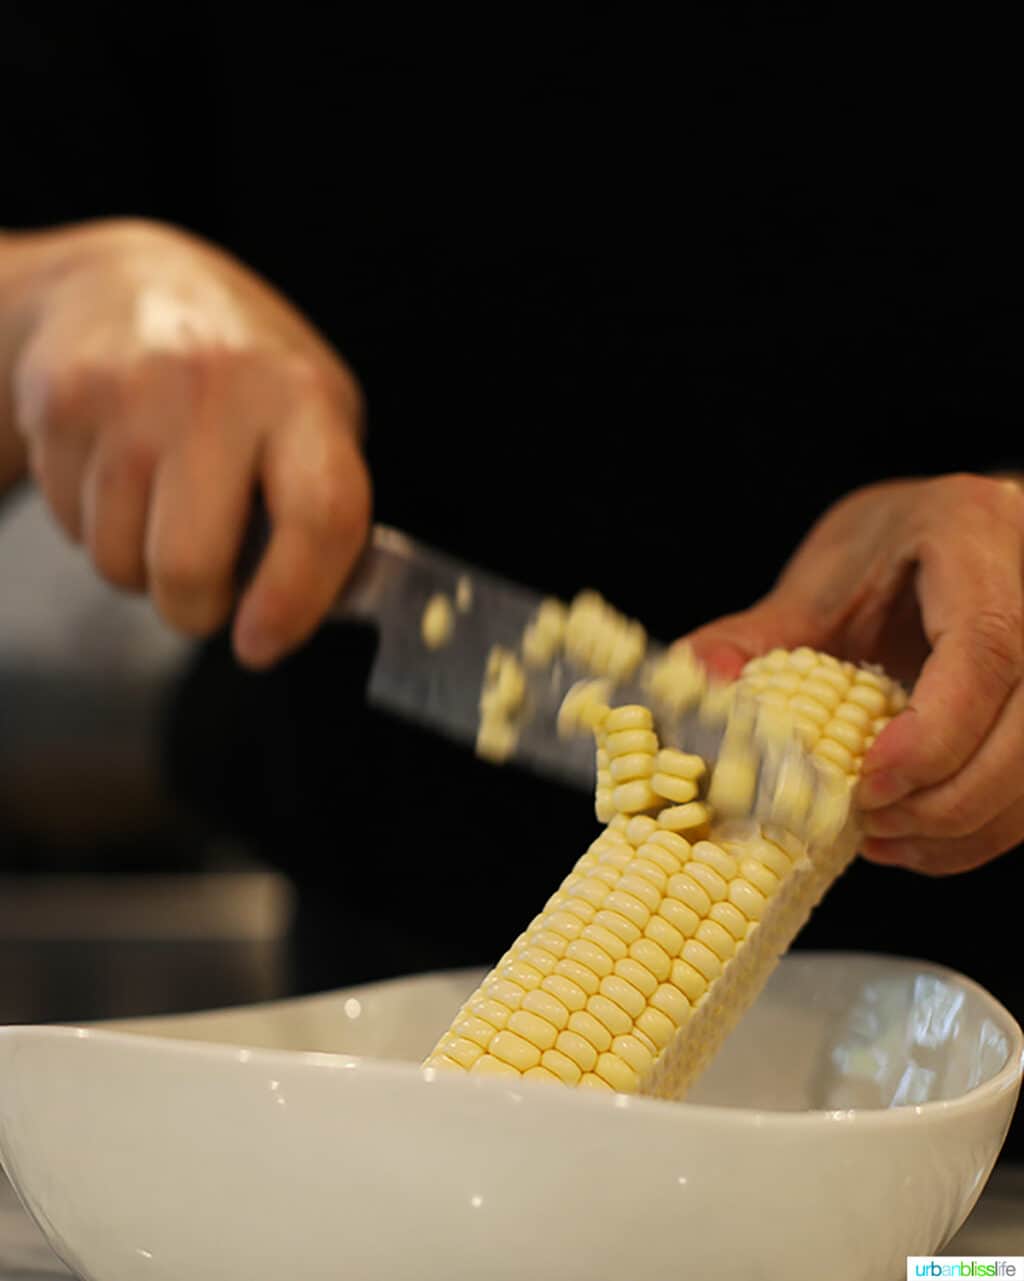 scraping the corn kernels off the cob